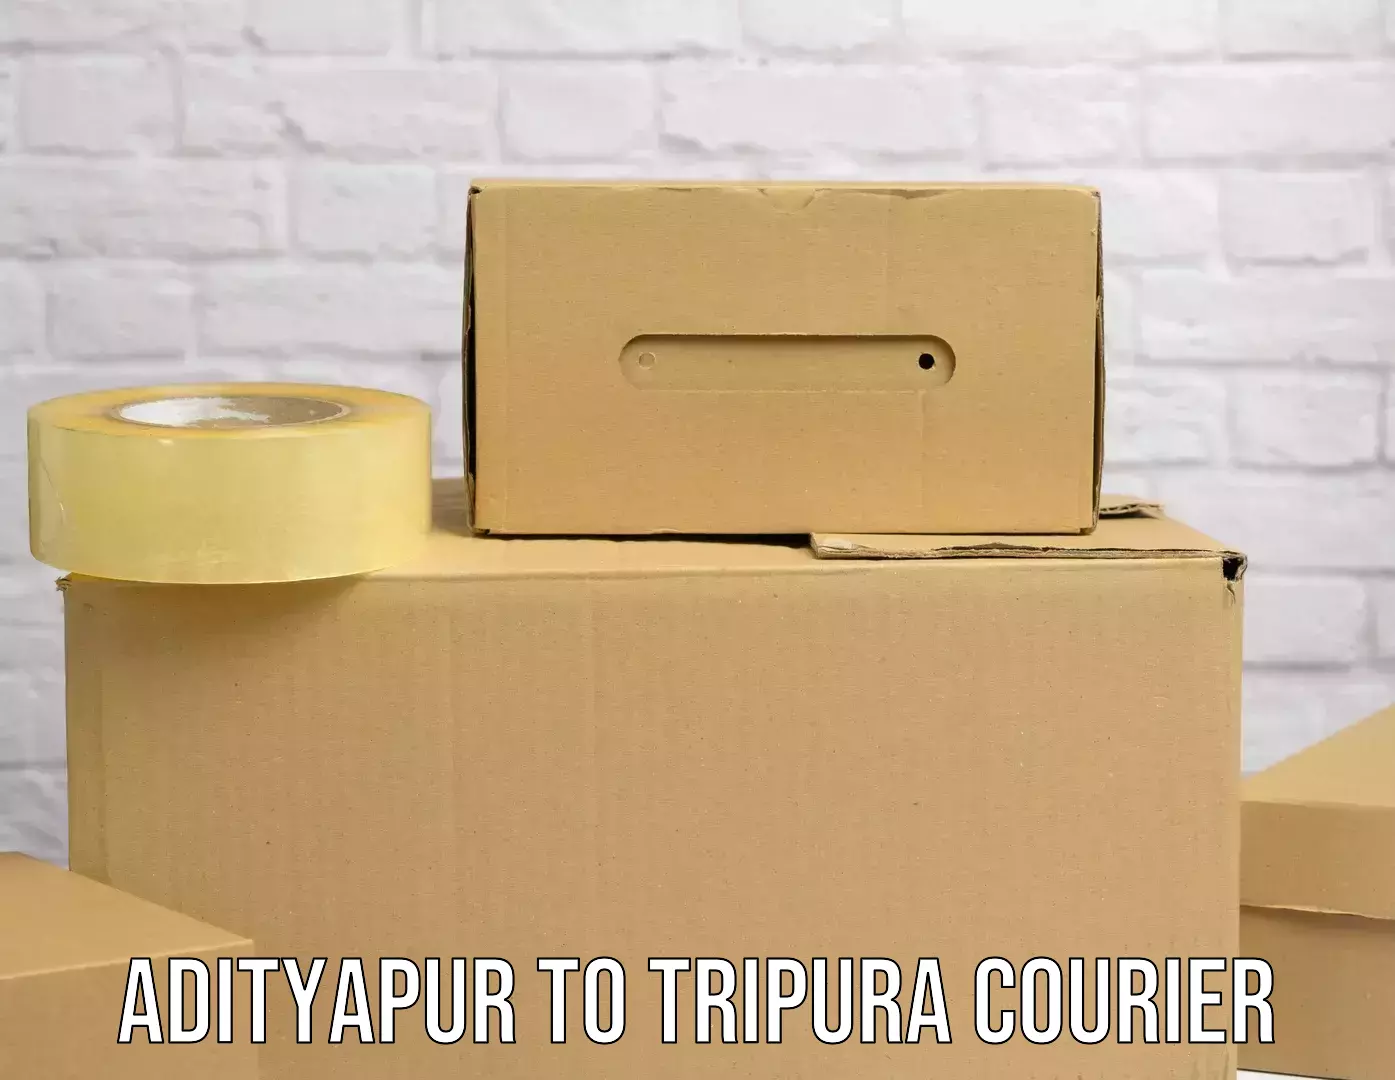 Courier service comparison Adityapur to Agartala